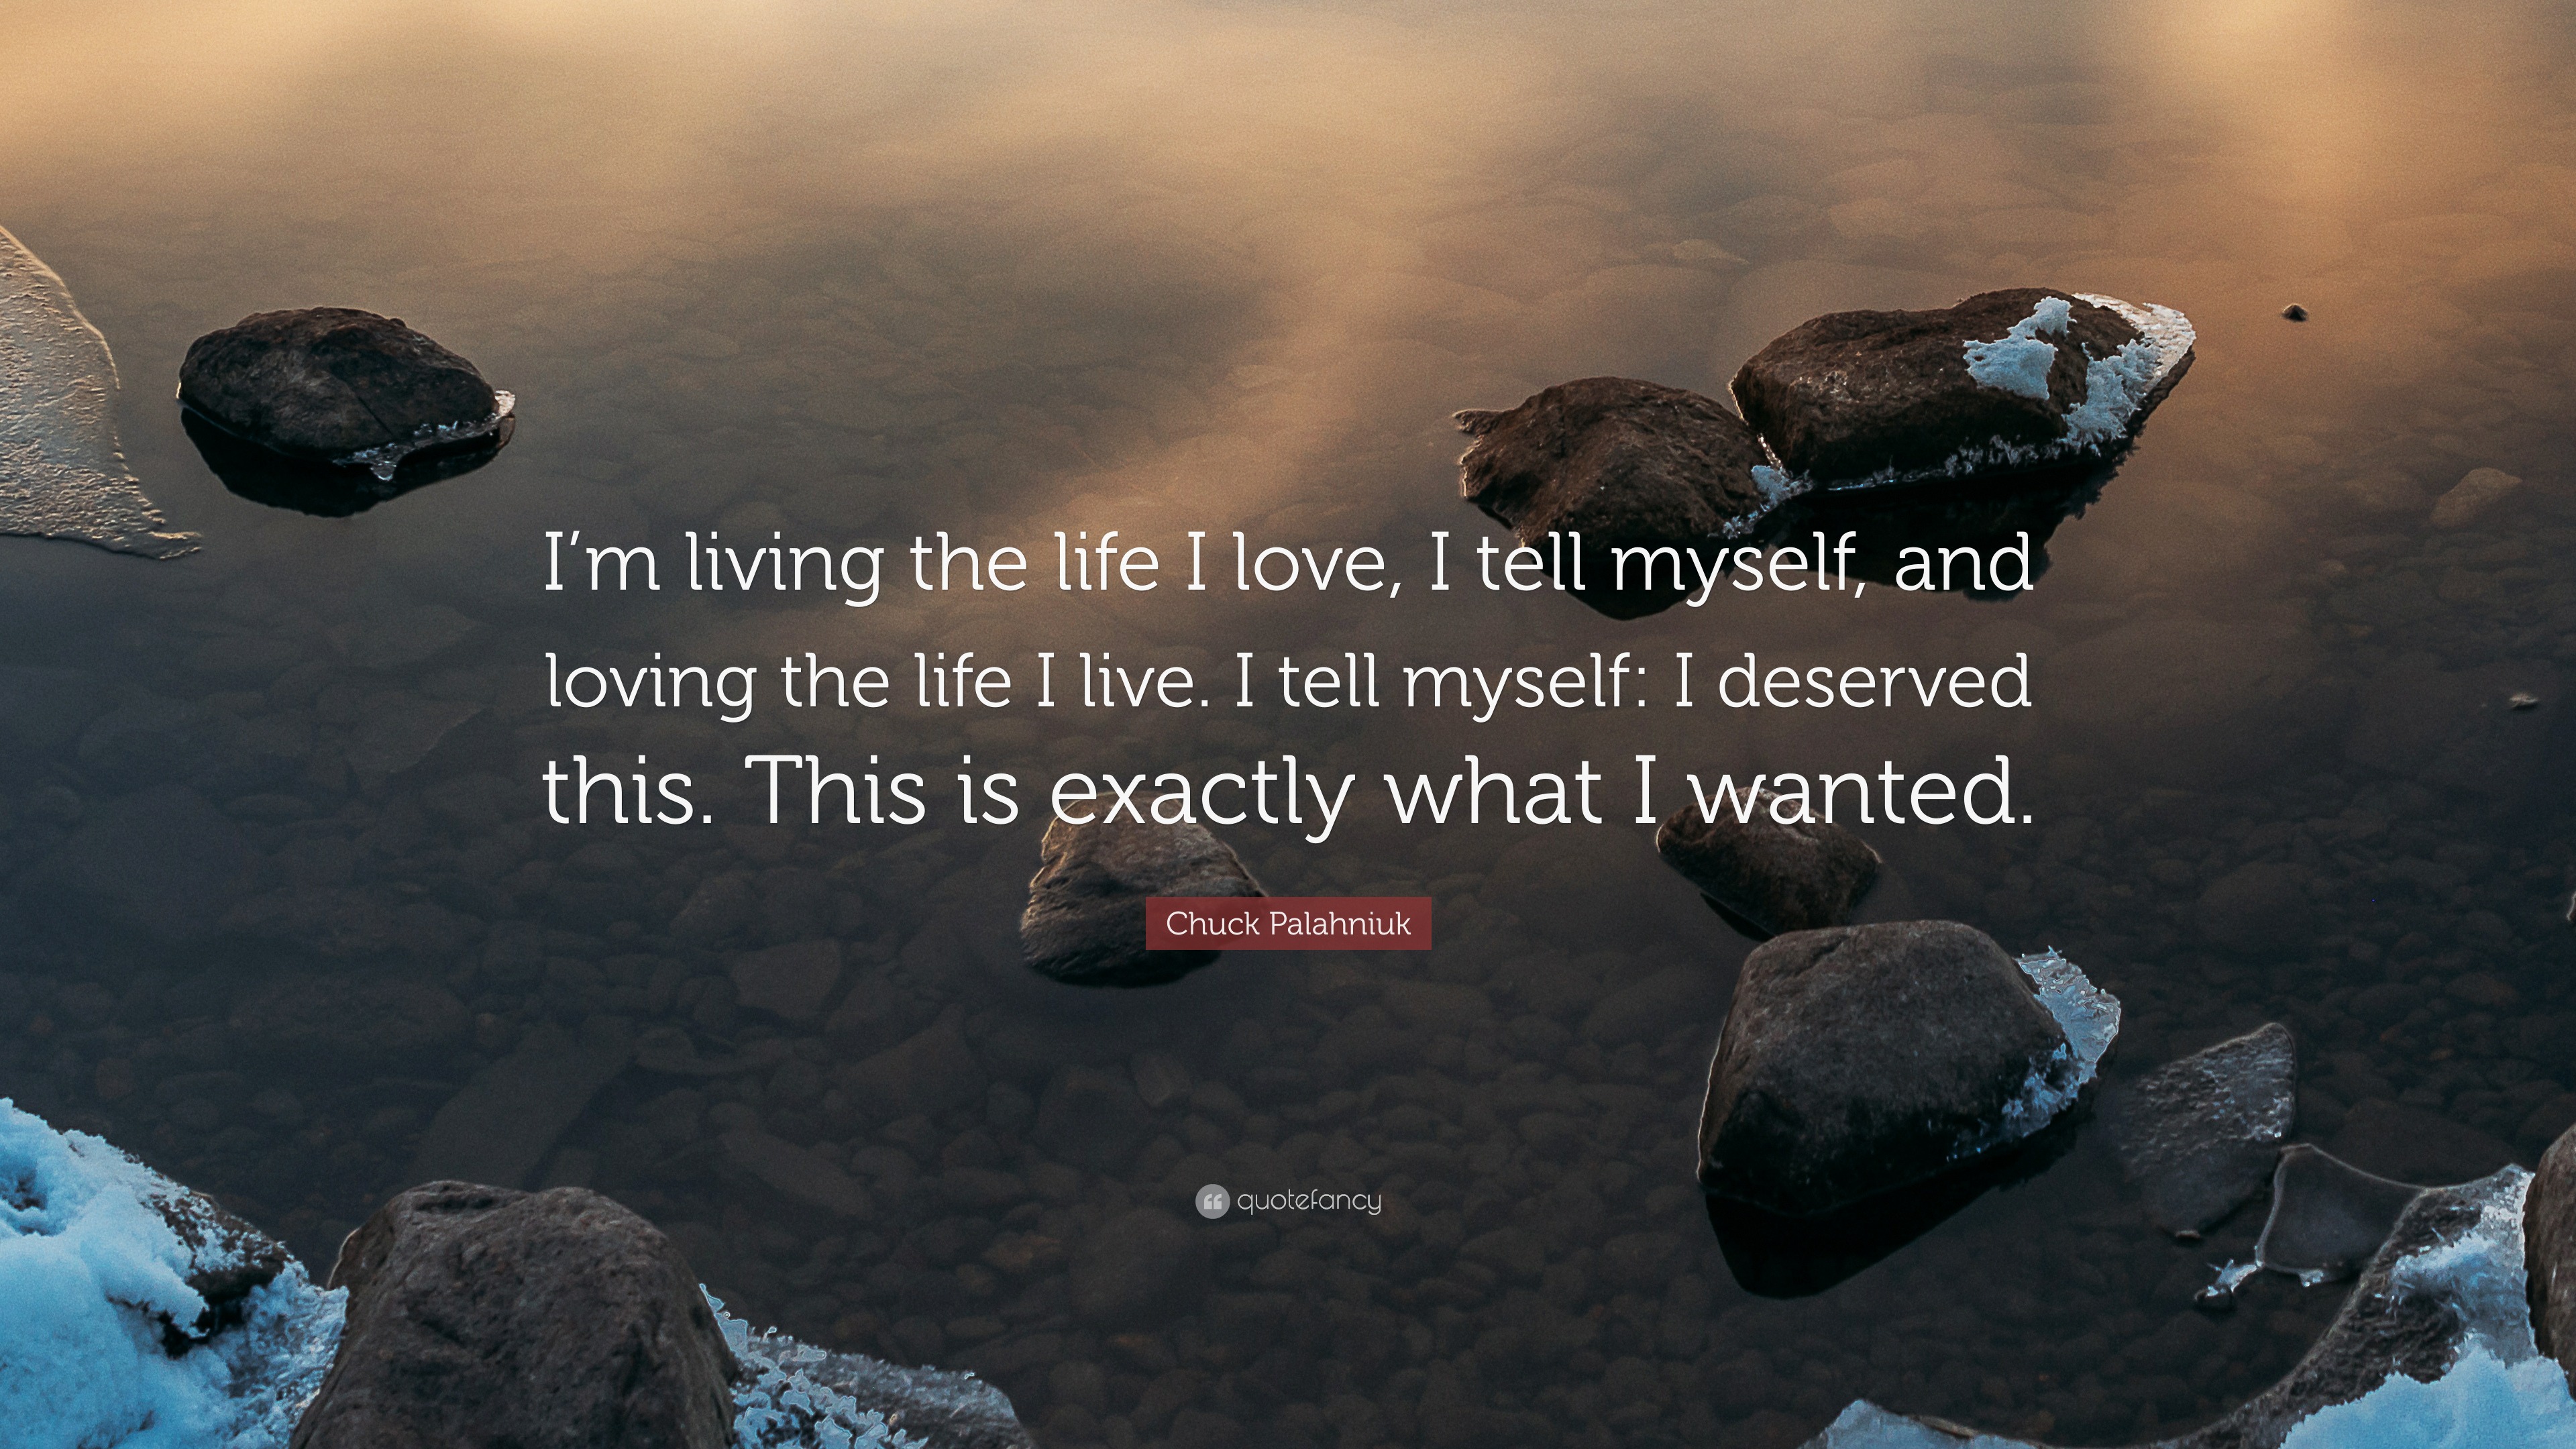 Chuck Palahniuk Quote “I m living the life I love I tell